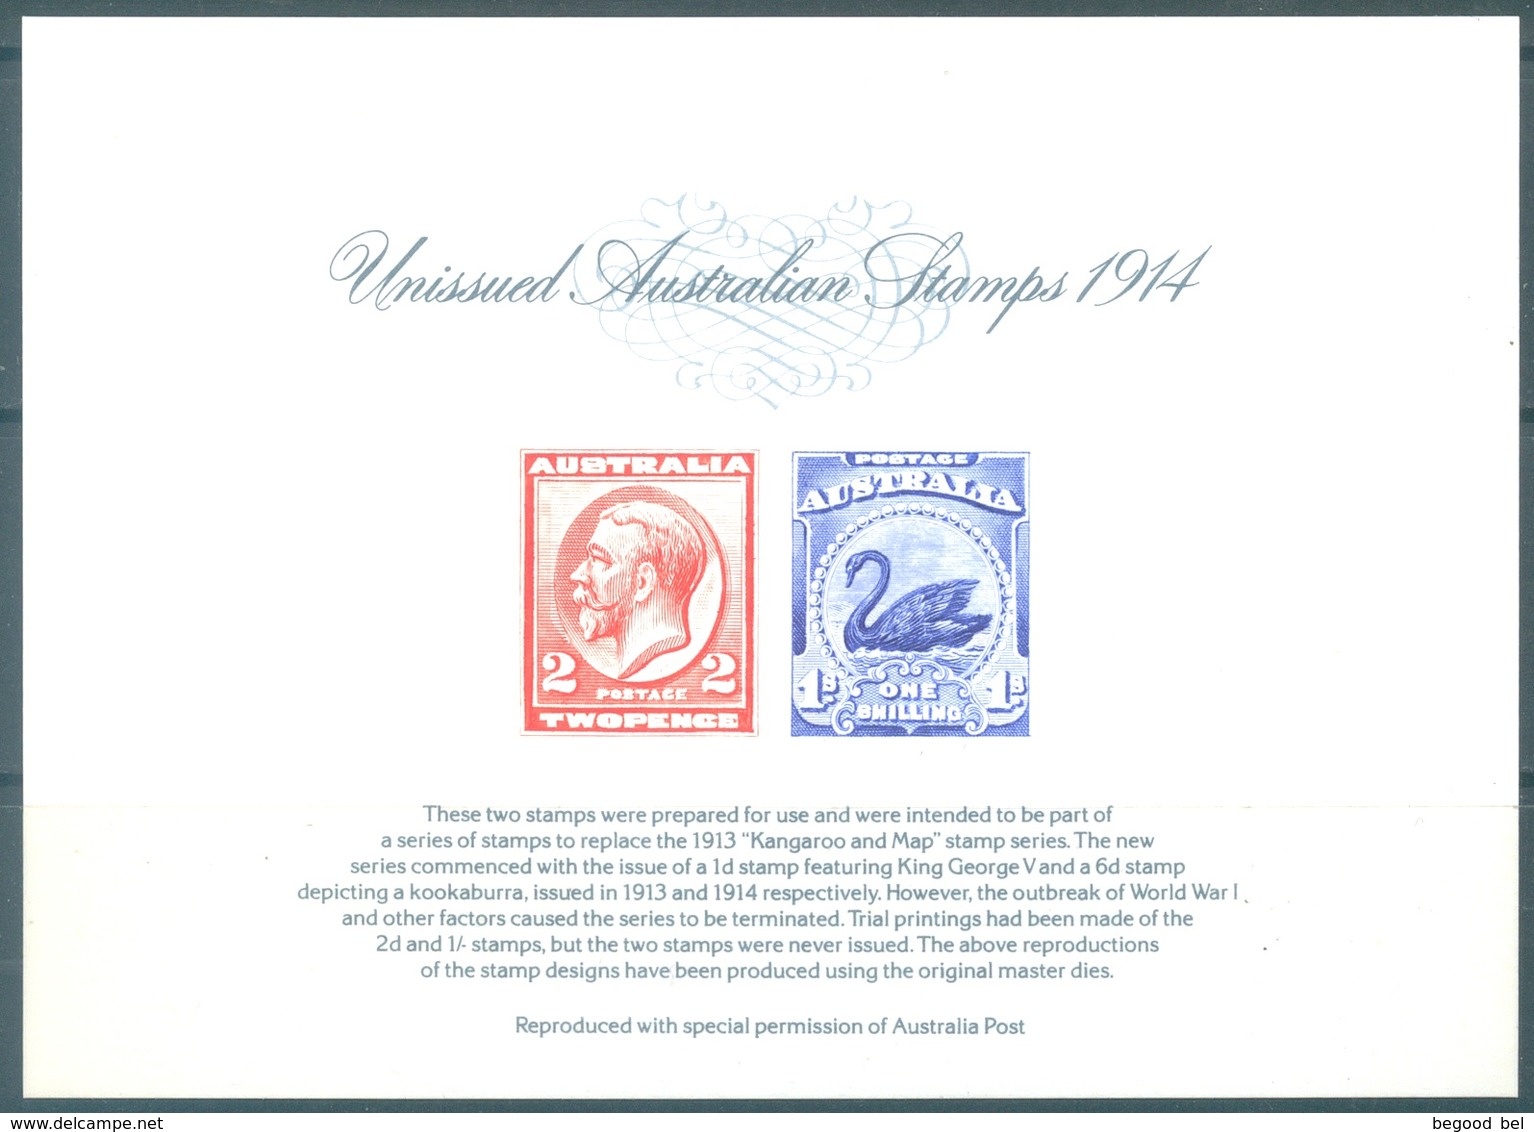 AUSTRALIA - MNH/** - AUSIPEX 84 - REPLICA CARD # 1 UNISSUED AUSTRALIAN STAMPS 1914 - 13838 - Lot 21494 - Prove & Ristampe